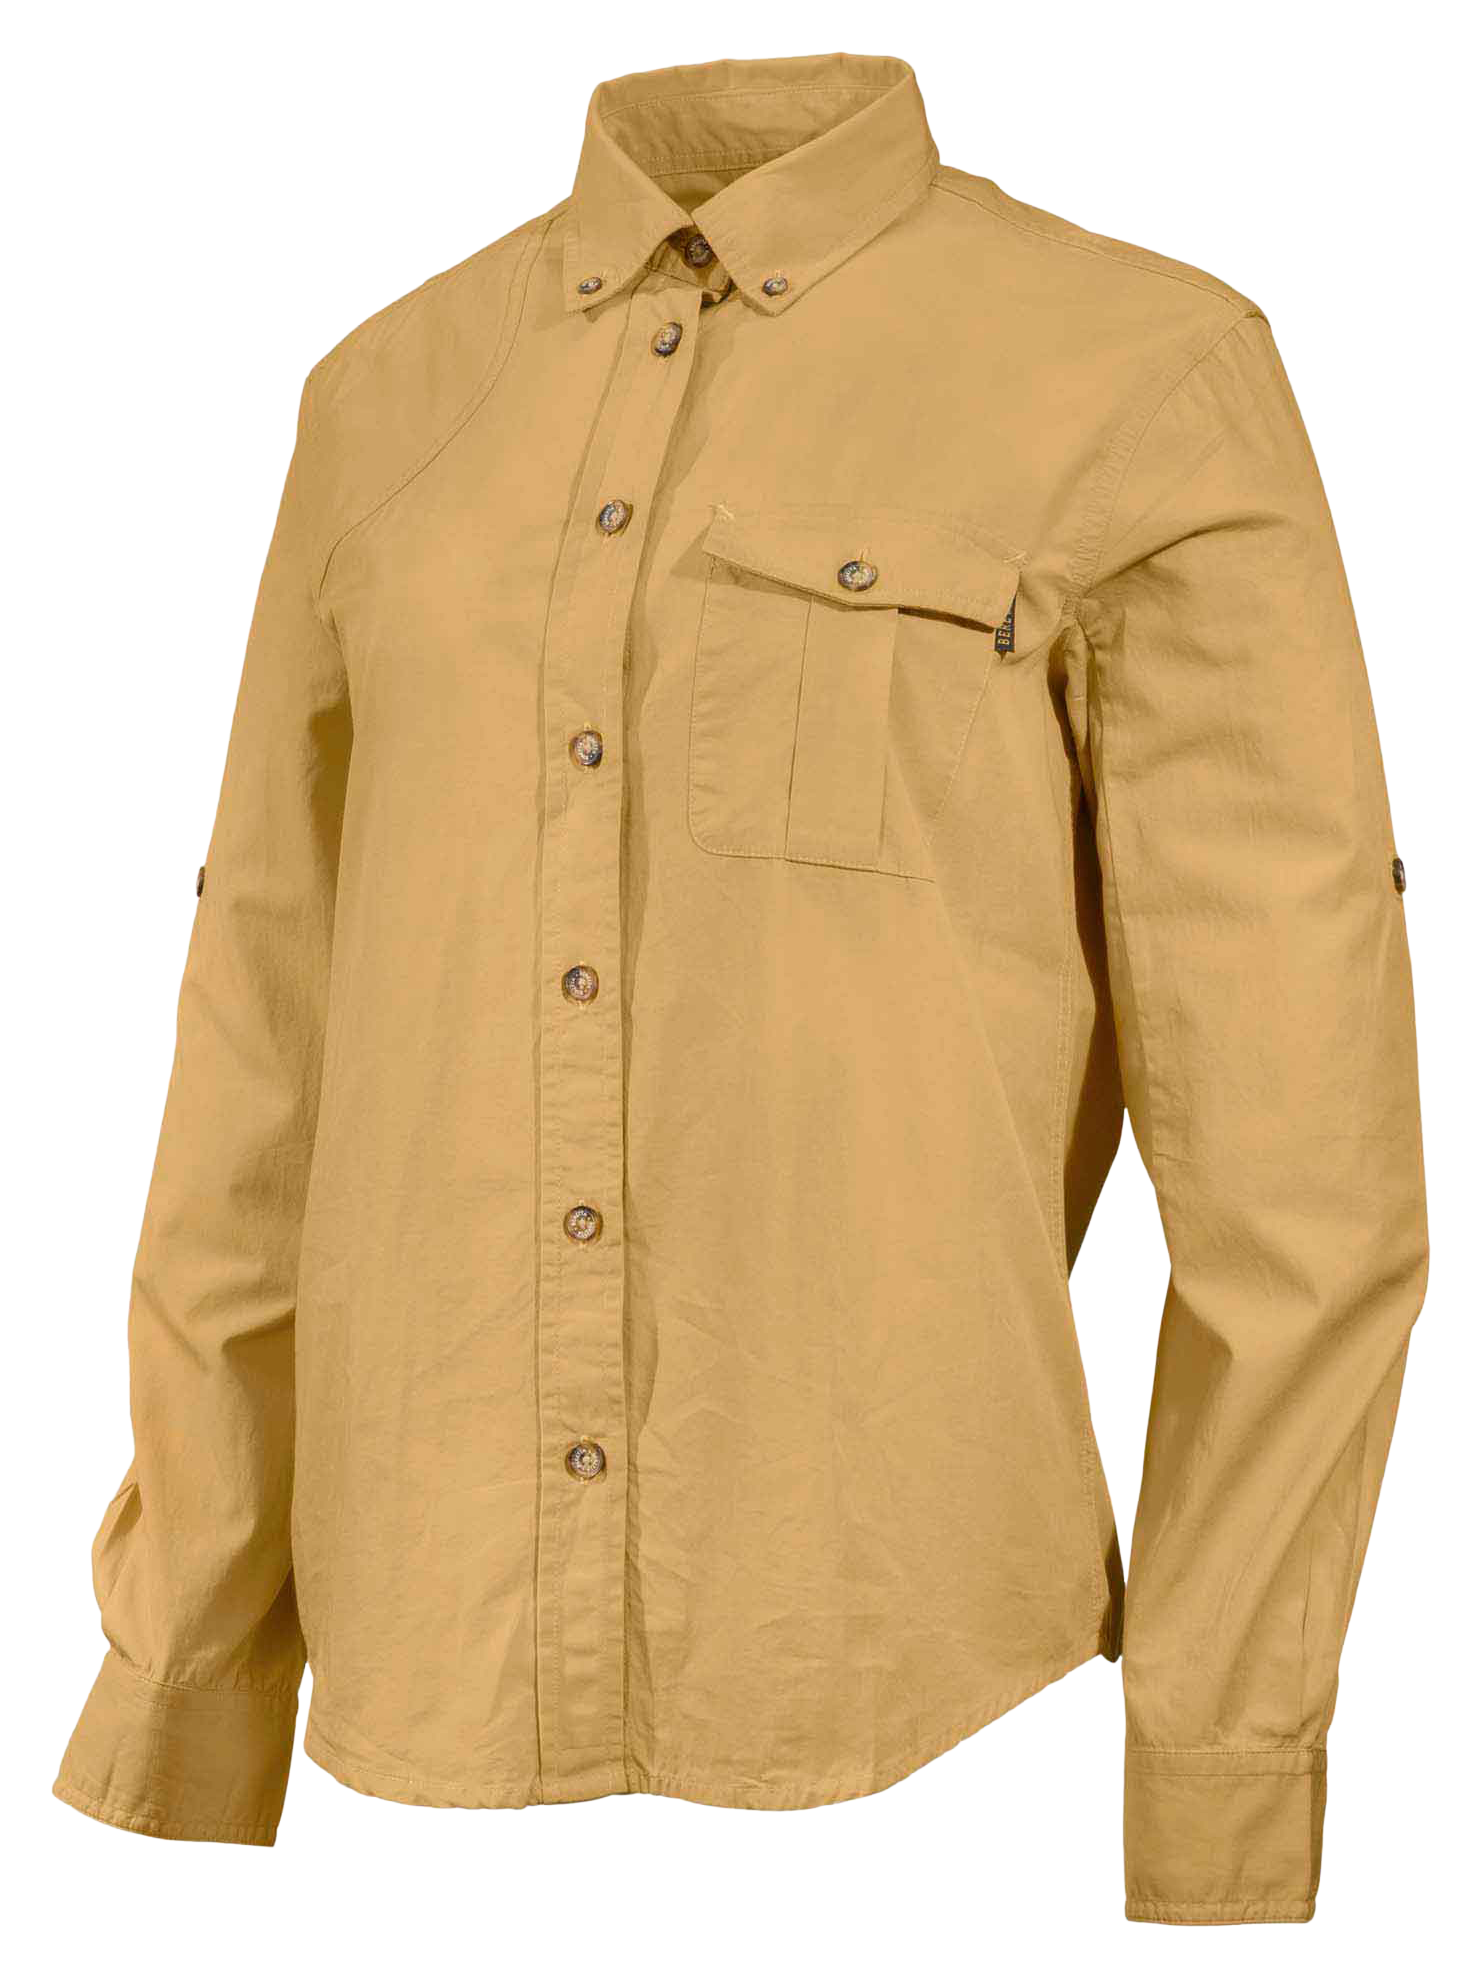 Beretta TM Shooting Long-Sleeve Button-Down Shirt for Ladies - Sand - M